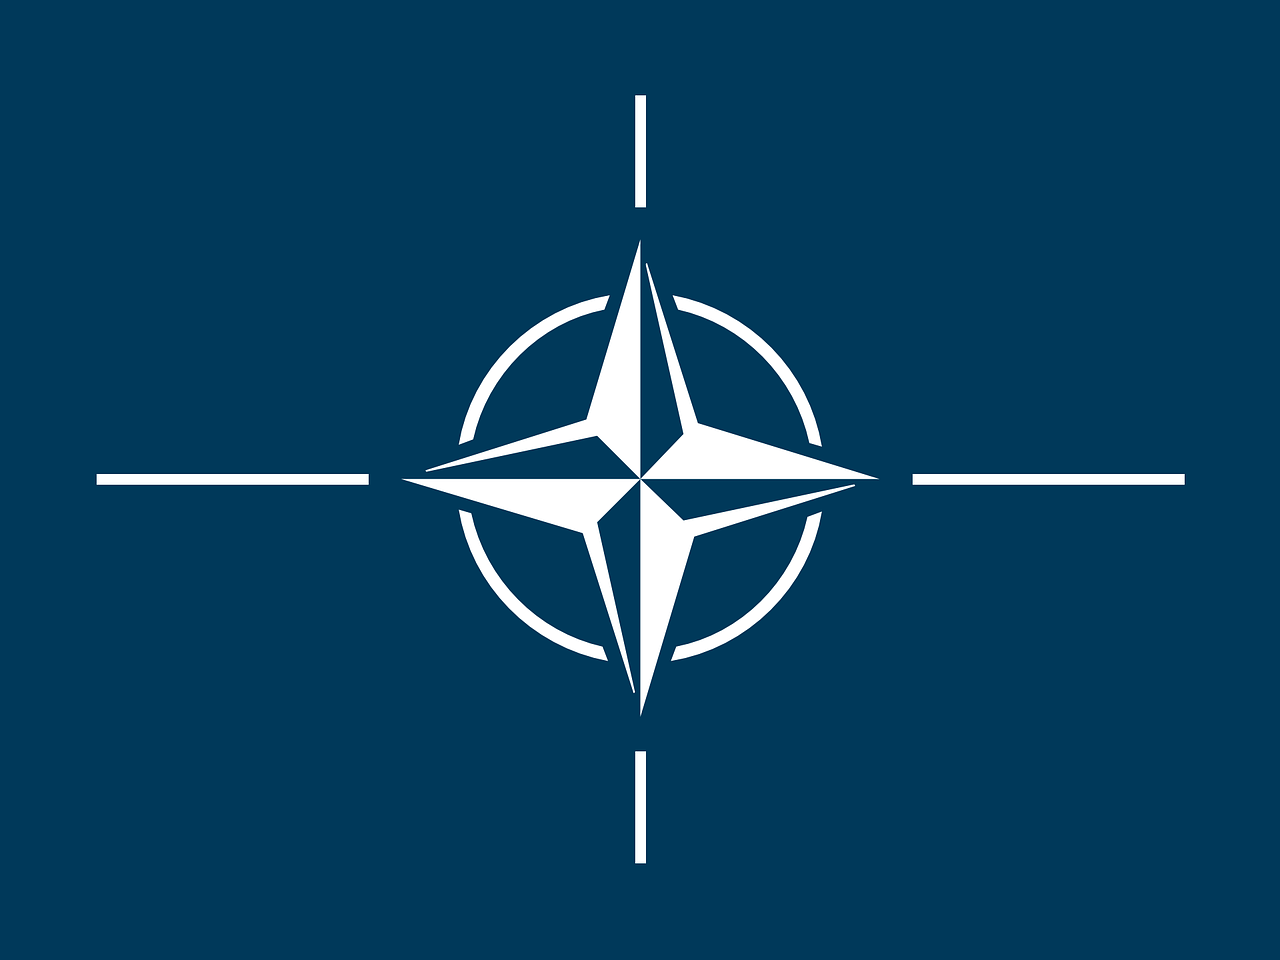 NATO leader denounces "sham" elections 